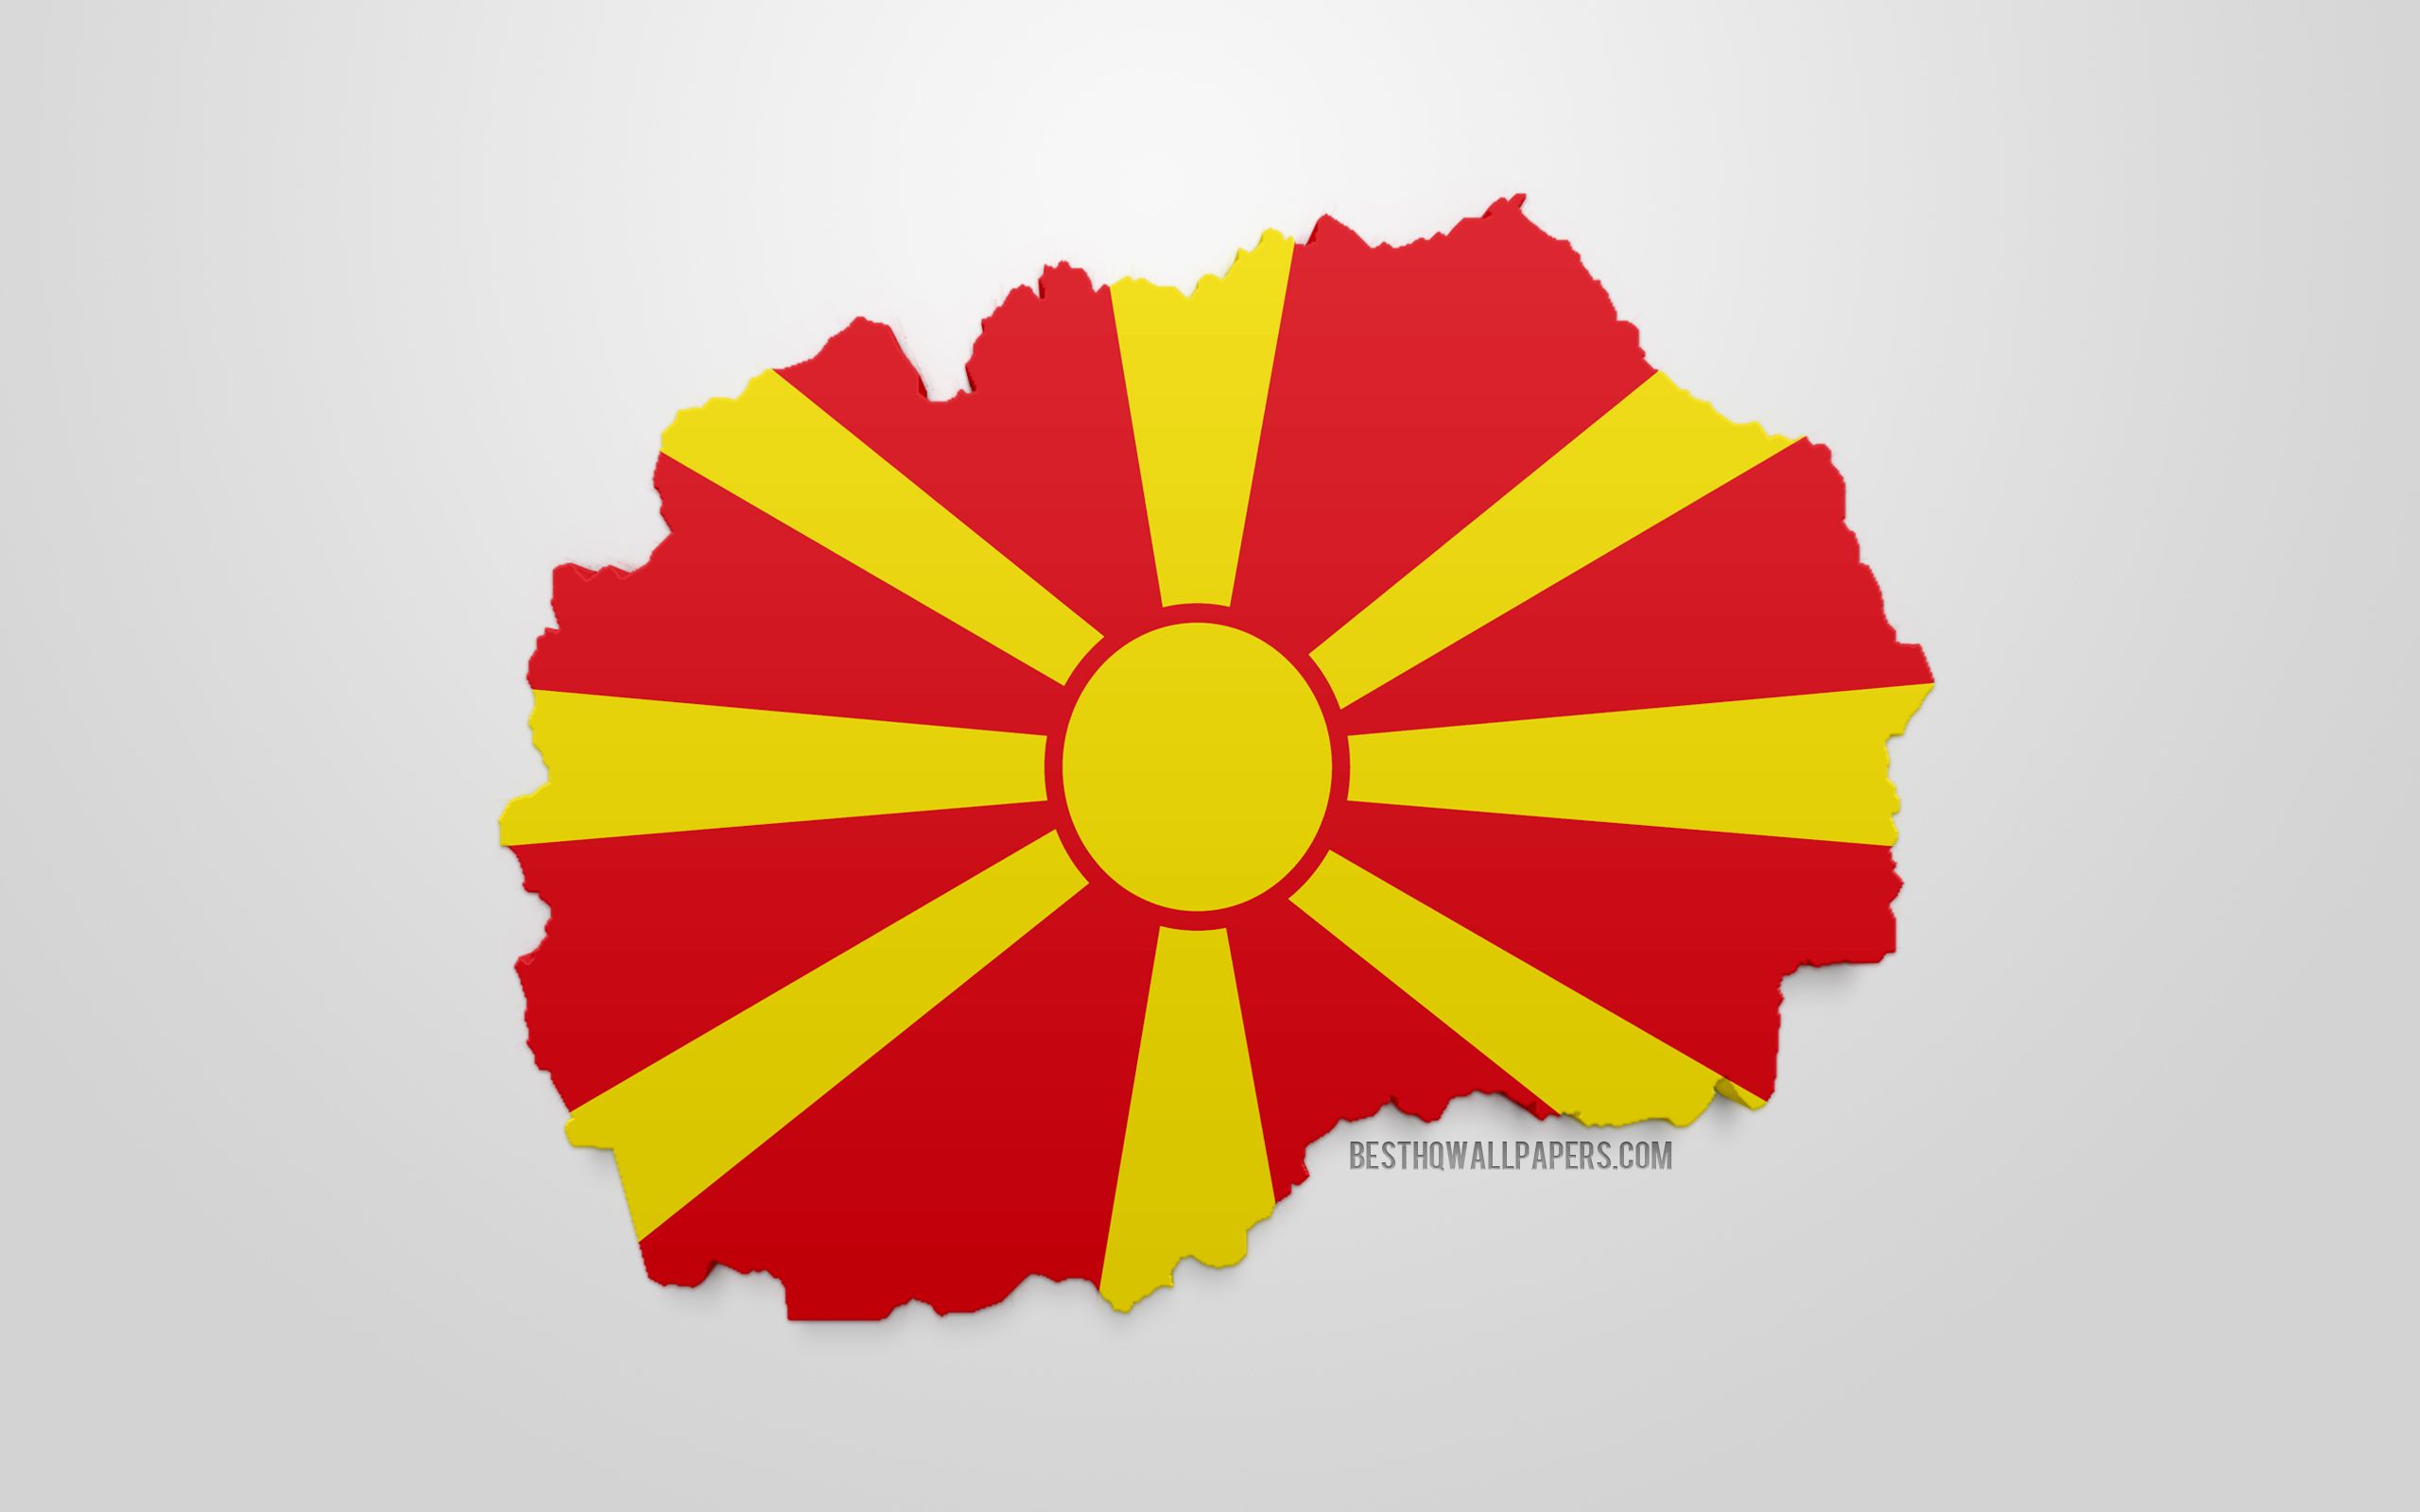 Download wallpaper 3D flag of North Macedonia, map silhouette of North Macedonia, 3D art, North Macedonia 3D flag, Europe, North Macedonia, geography, North Macedonia 3D silhouette for desktop with resolution 2560x1600. High